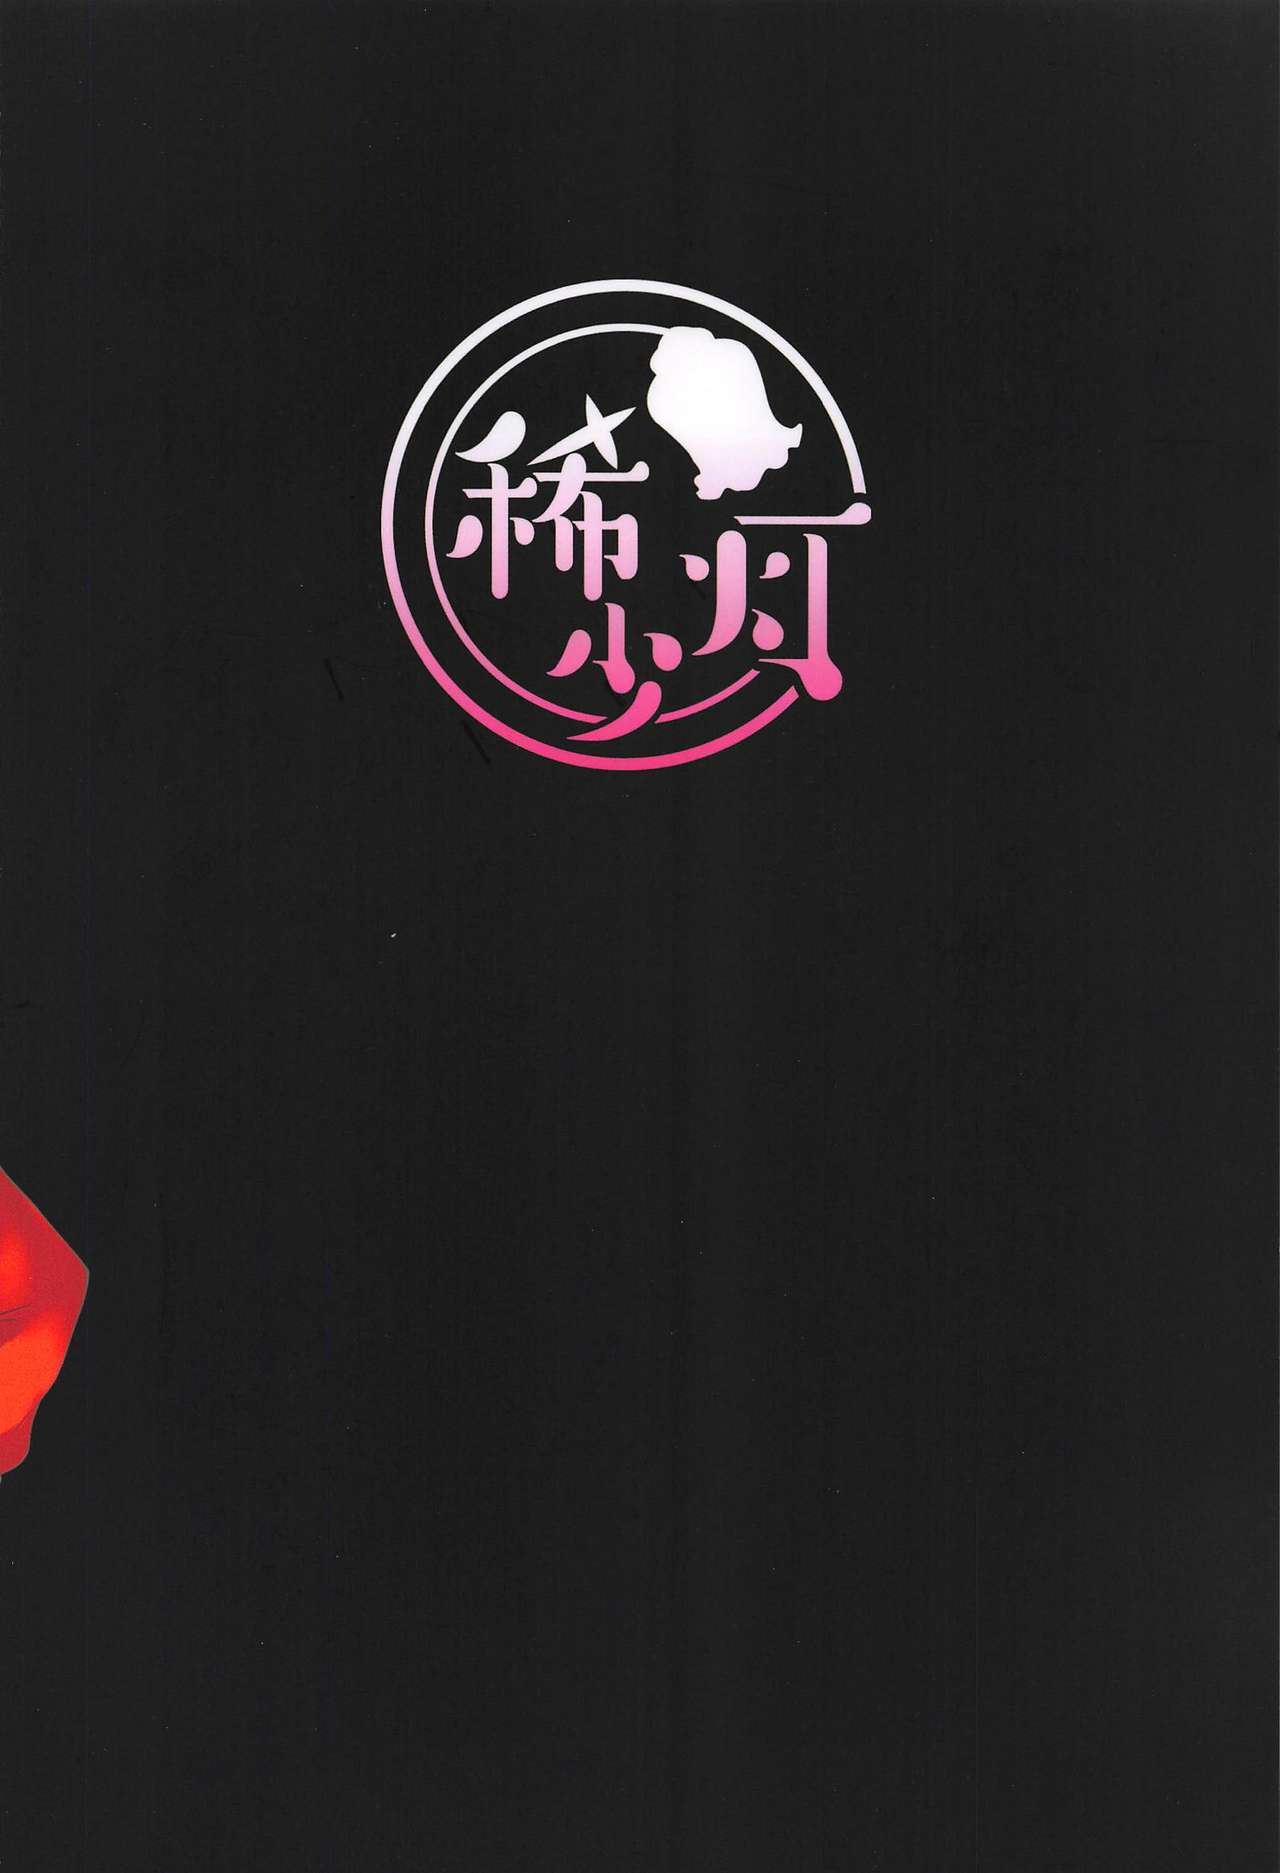 (C97) [稀少灯 (KI紗)] sexual servant vol.1 (Fate/Grand Order)